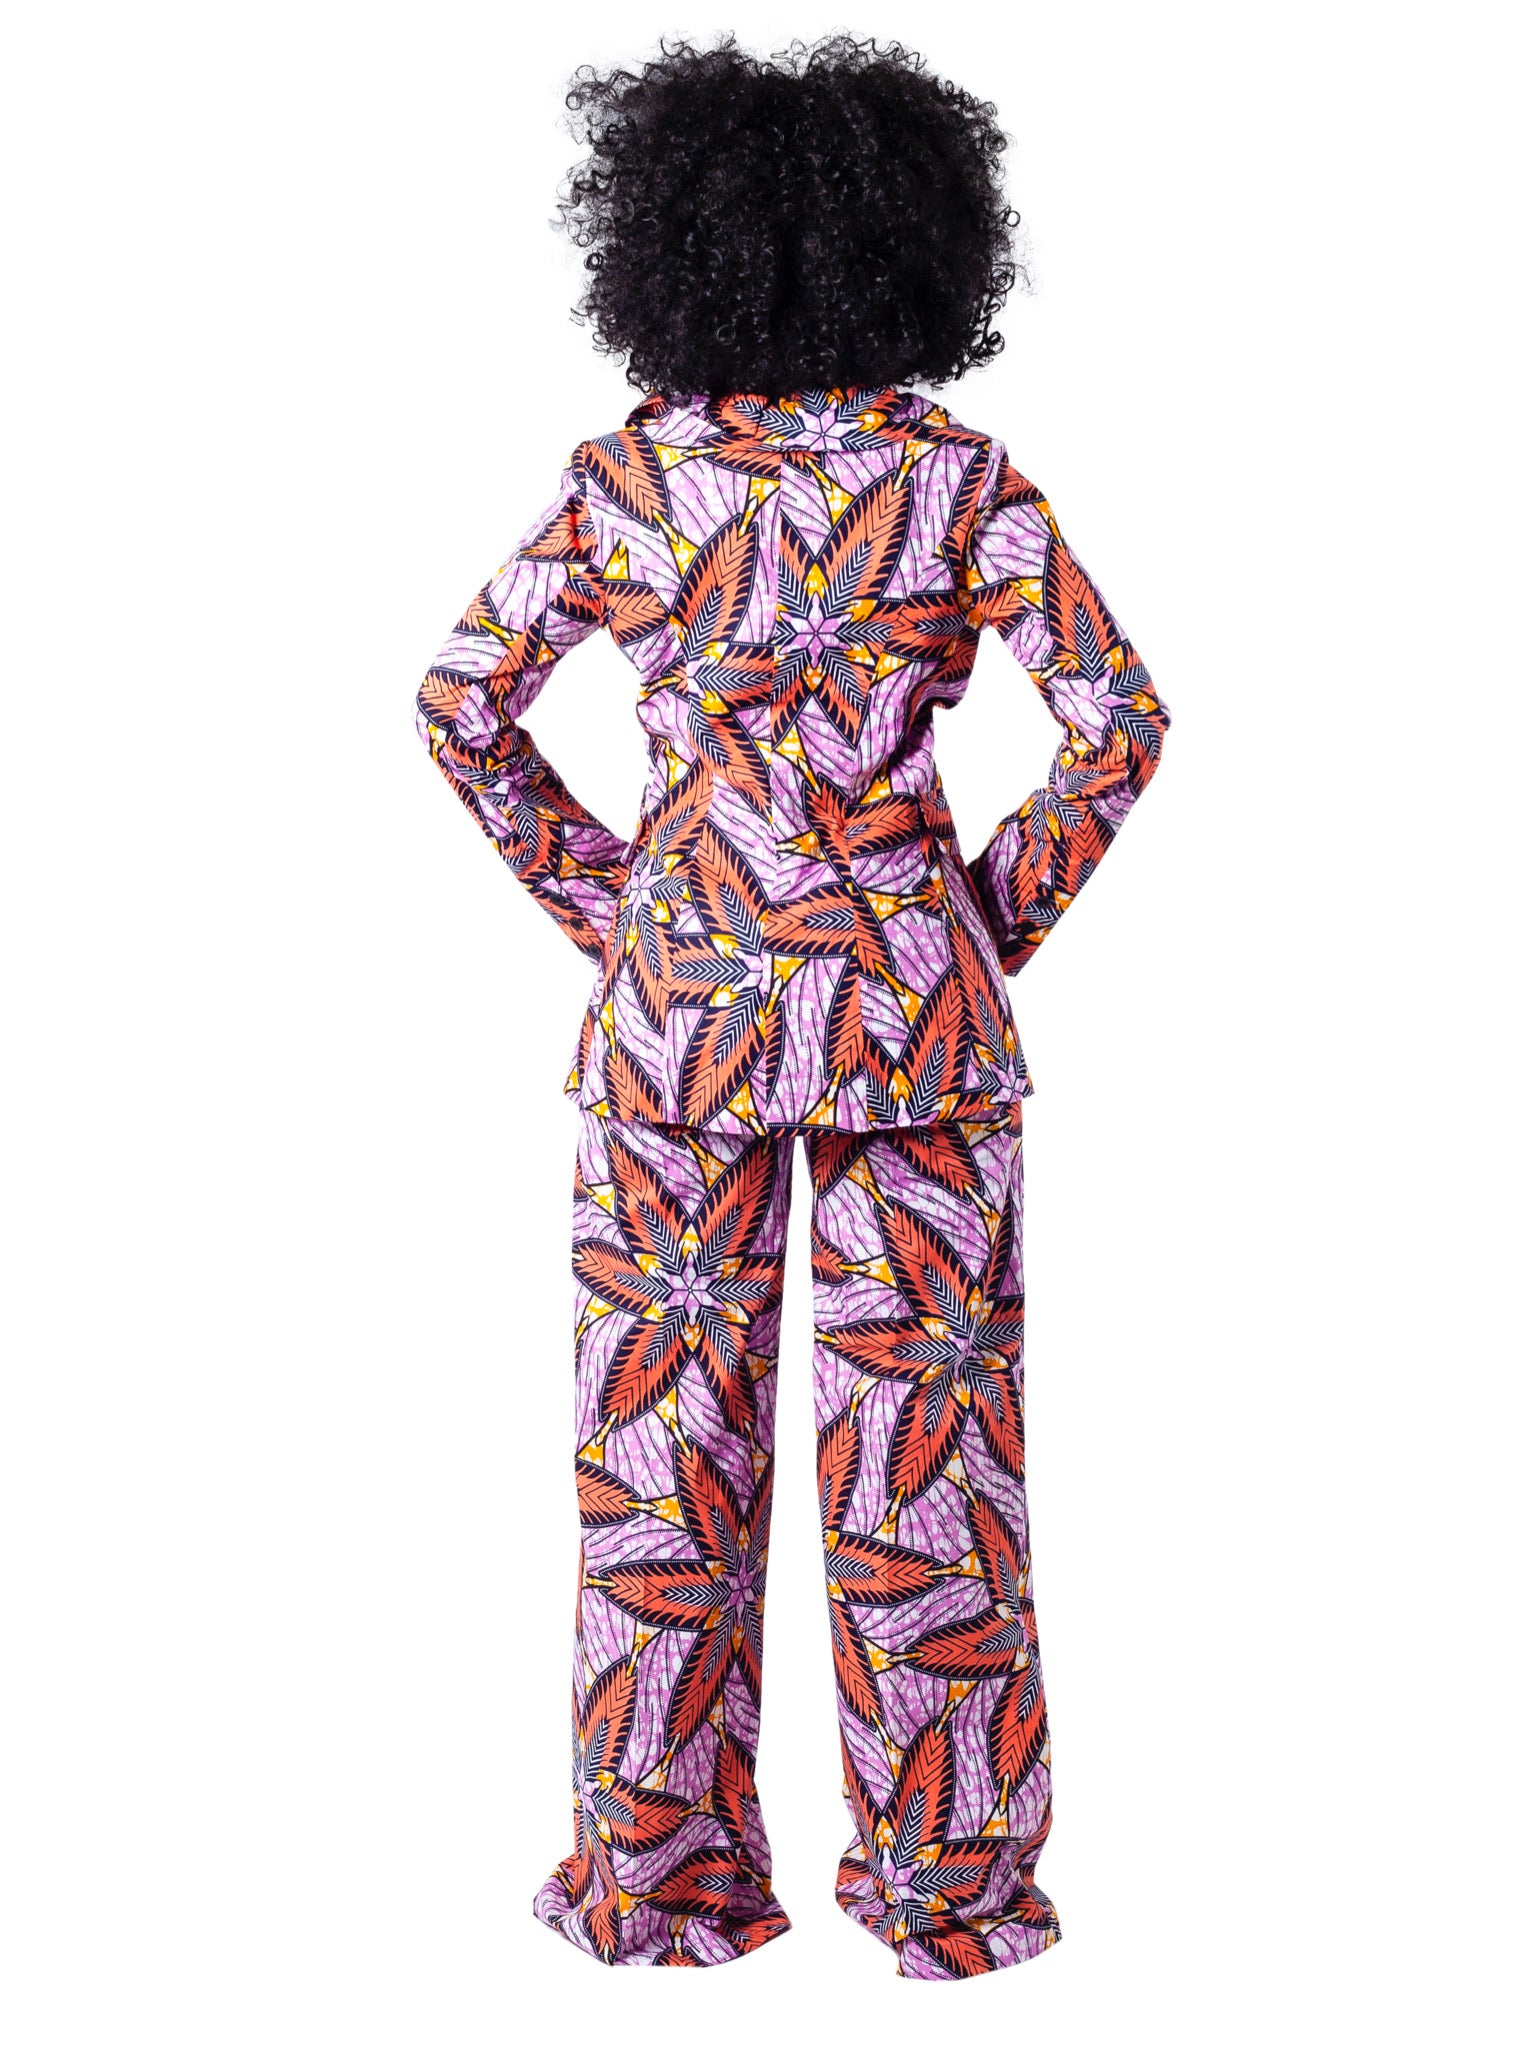 Women&#39;s ruffled lapel African Print blazer. Pink purple yellow navy blue all over batik print by Chen Burkett New York